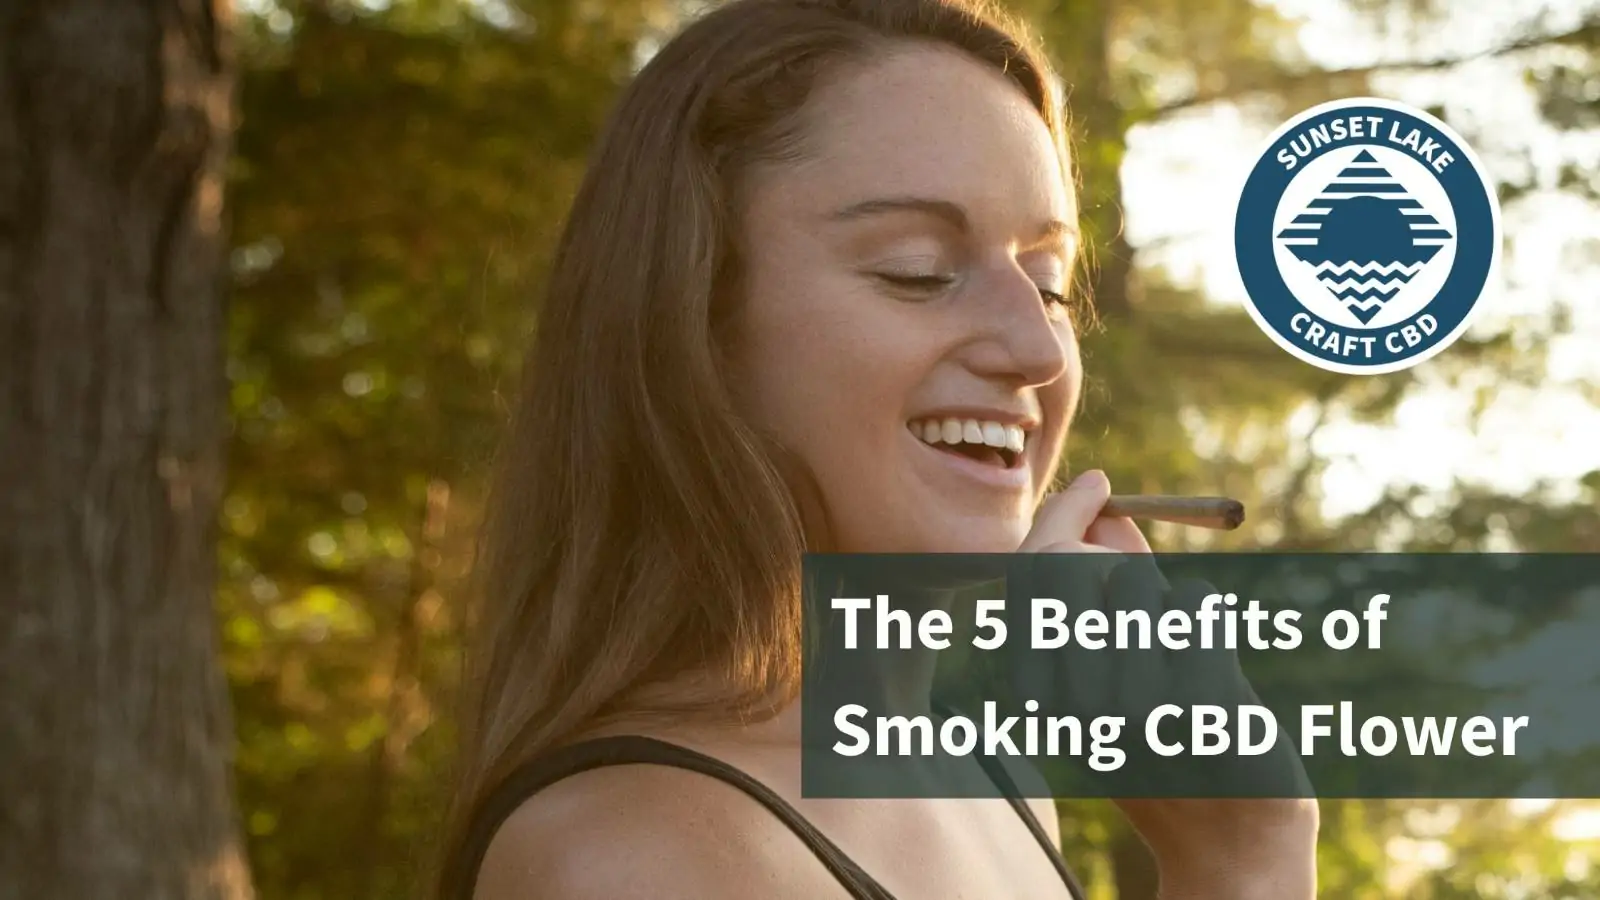 The 5 Benefits of Smoking CBD